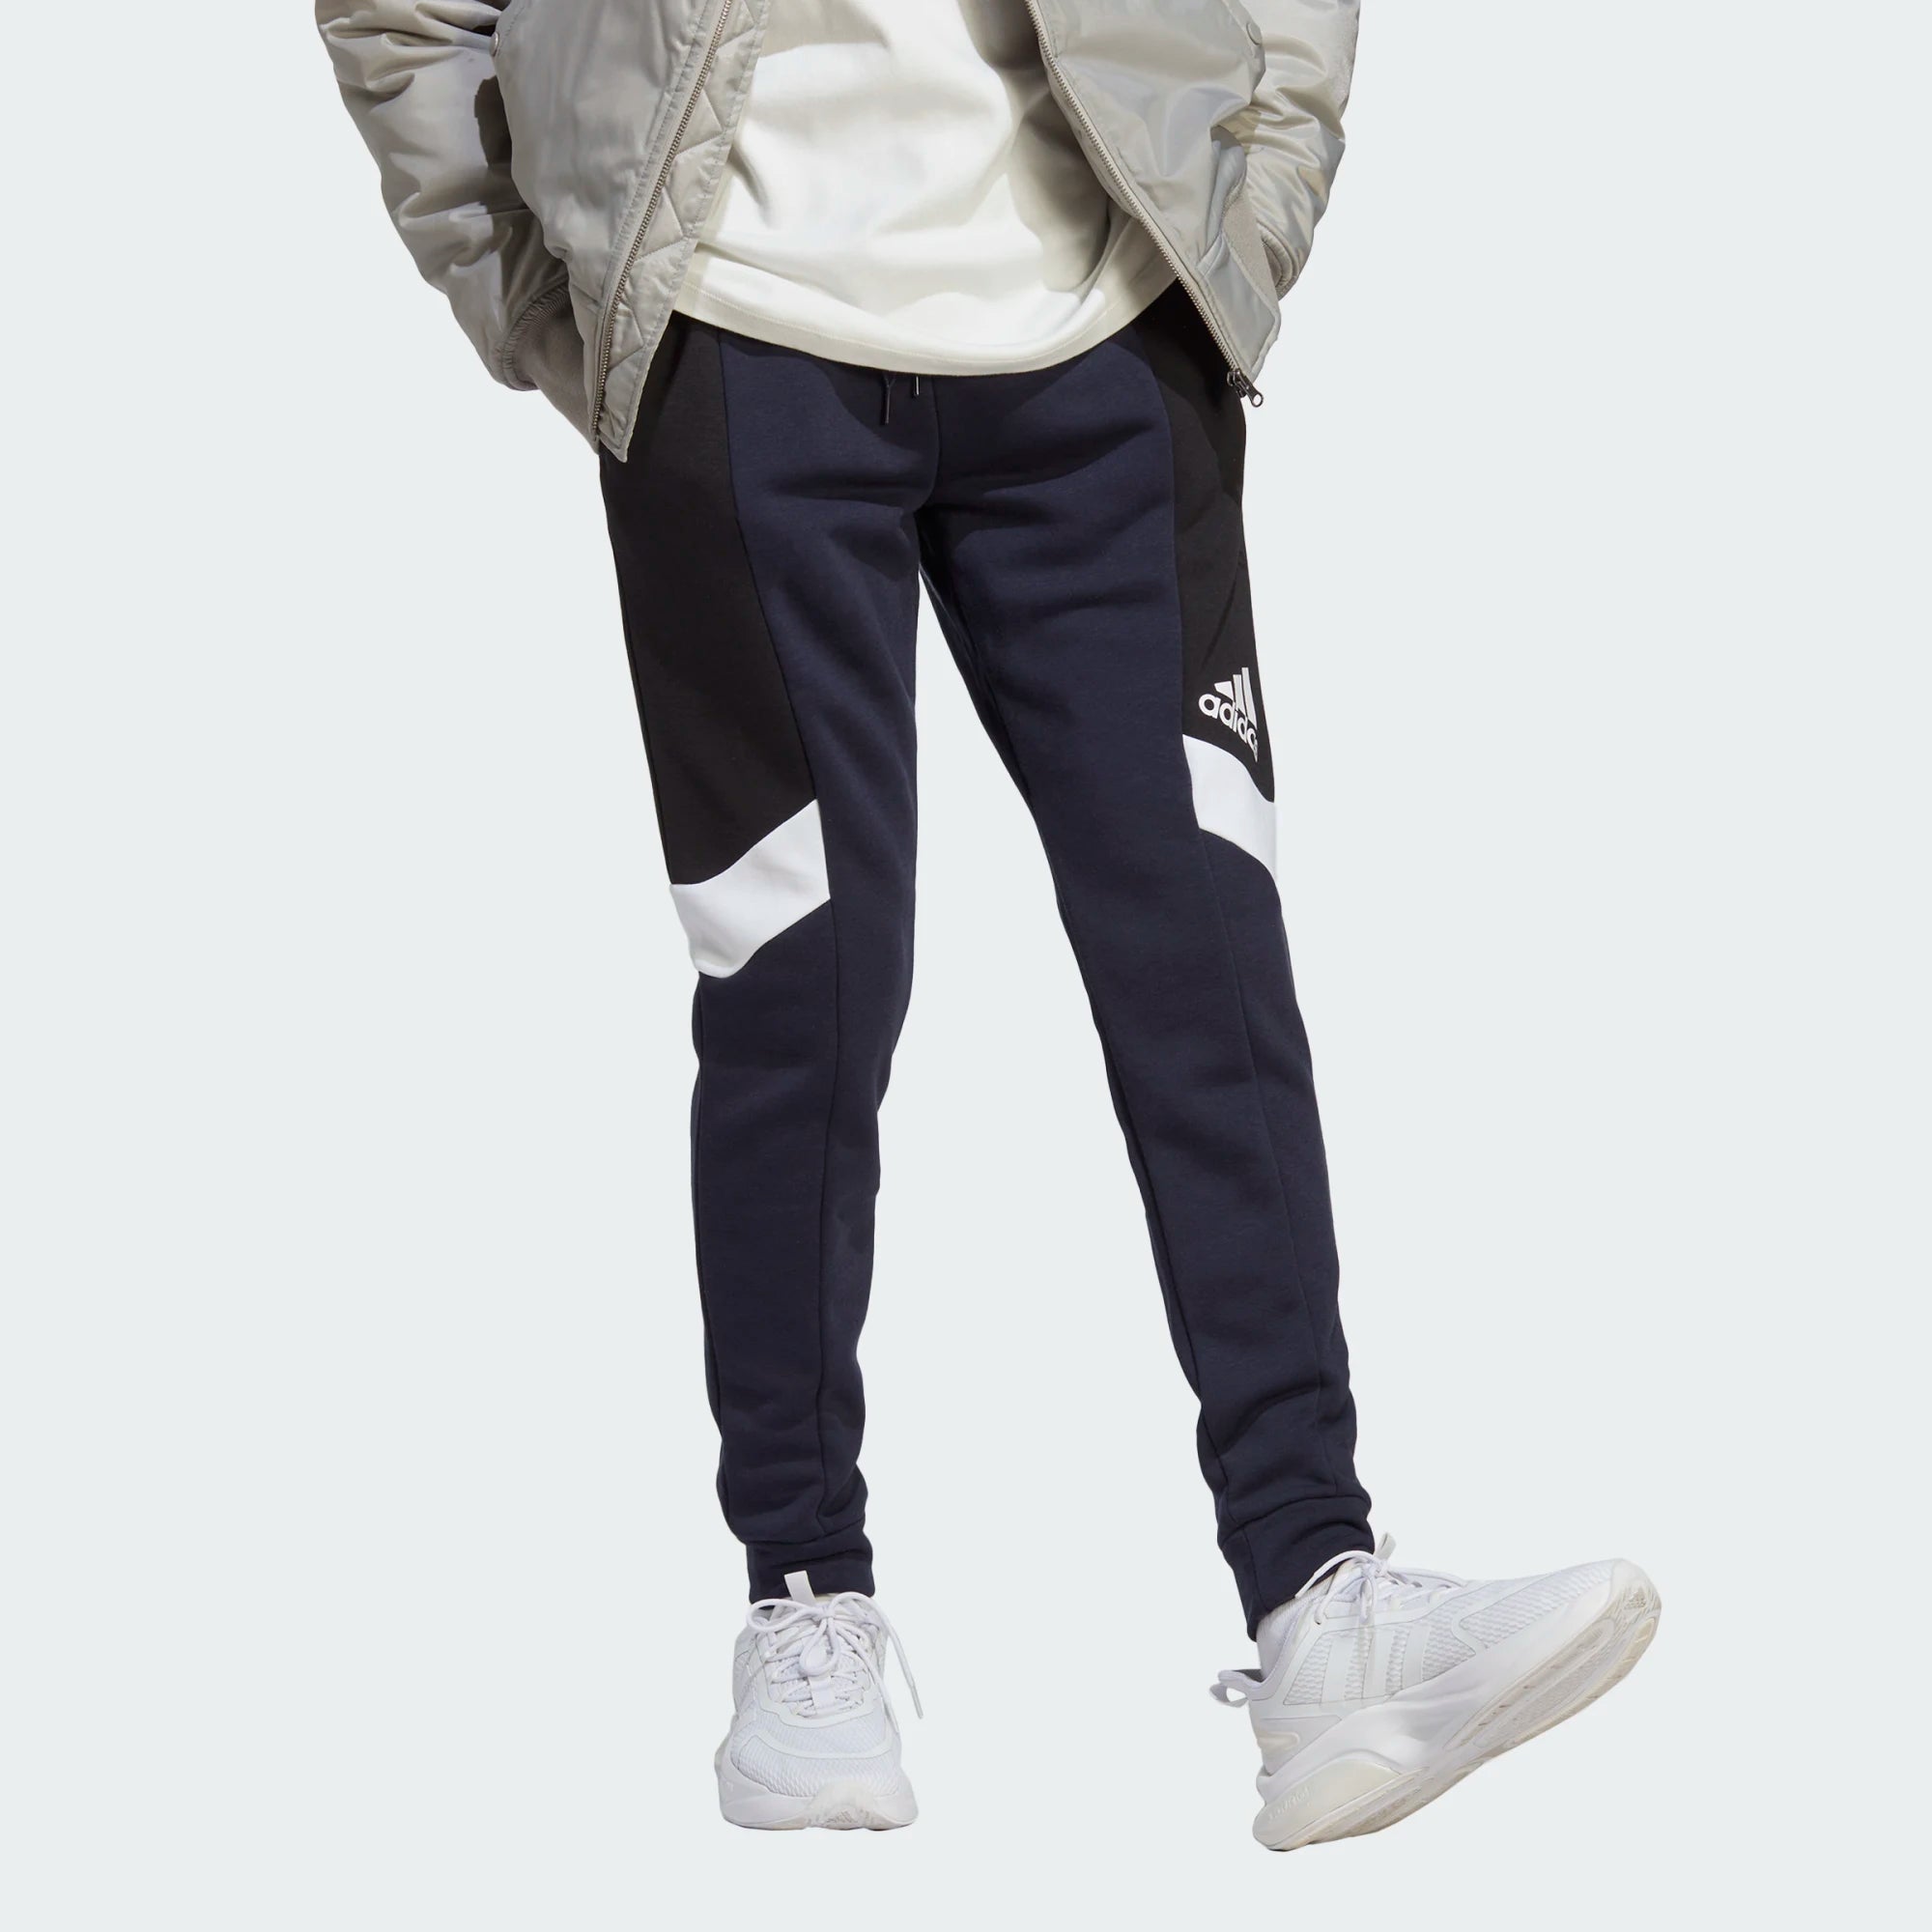 Adidas Essentials Colorblock Hose – Blau/Noir/Weiß